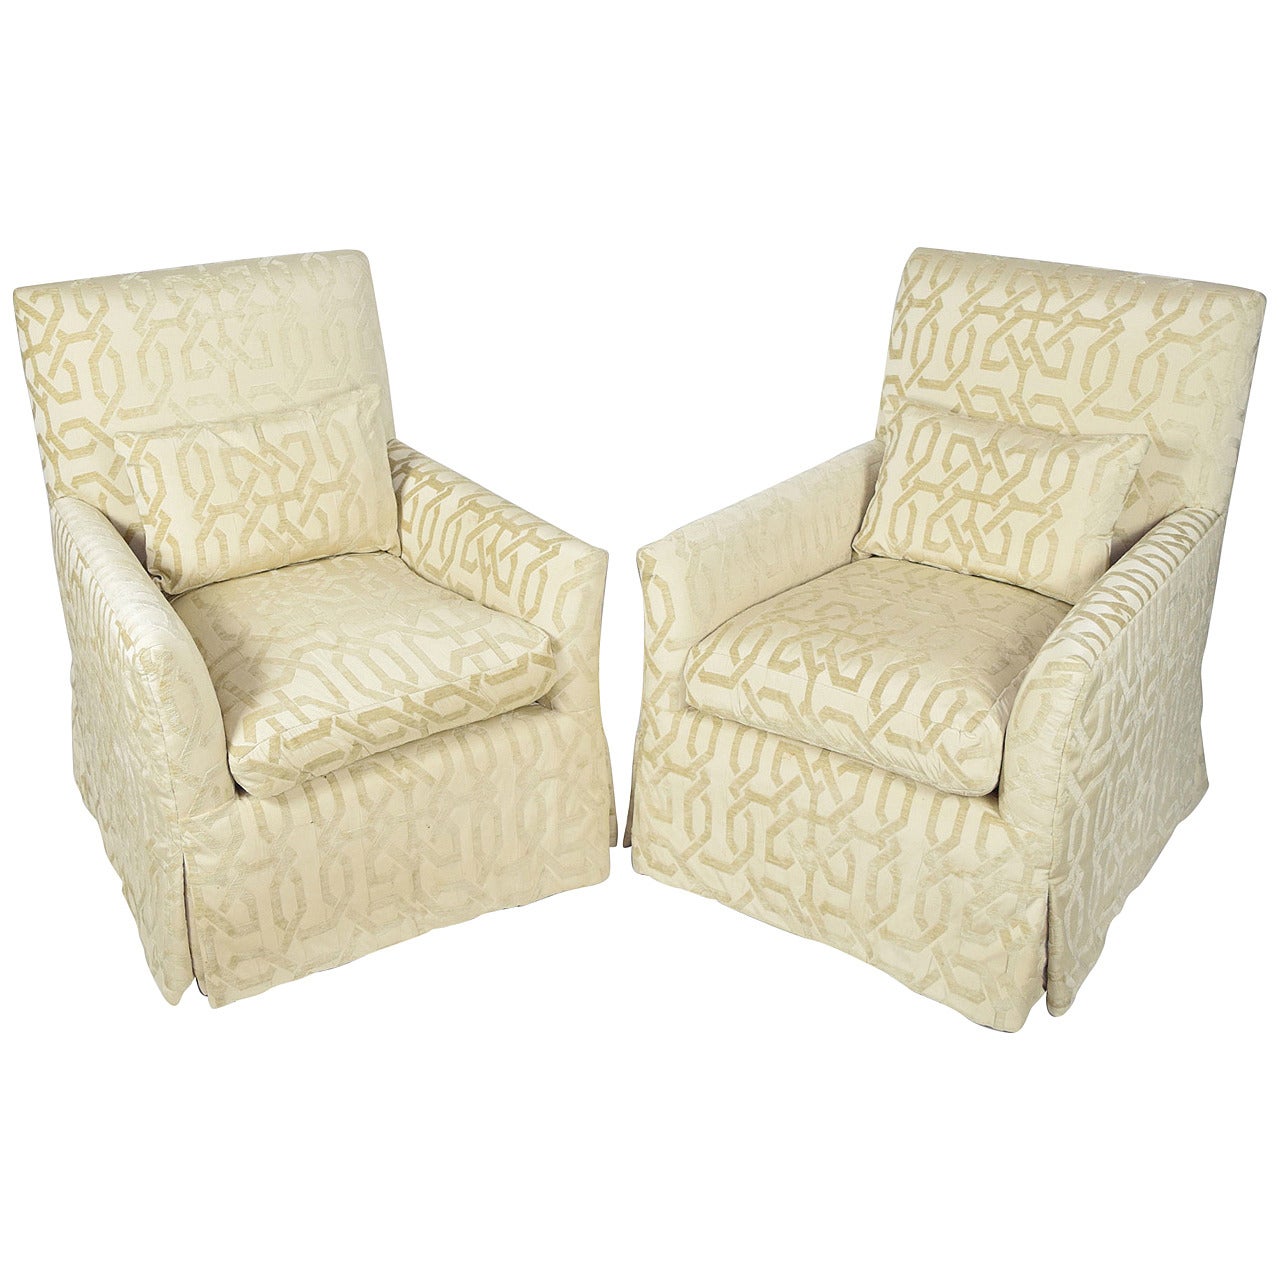 R Jones "Charleston" Style Lounge Chairs